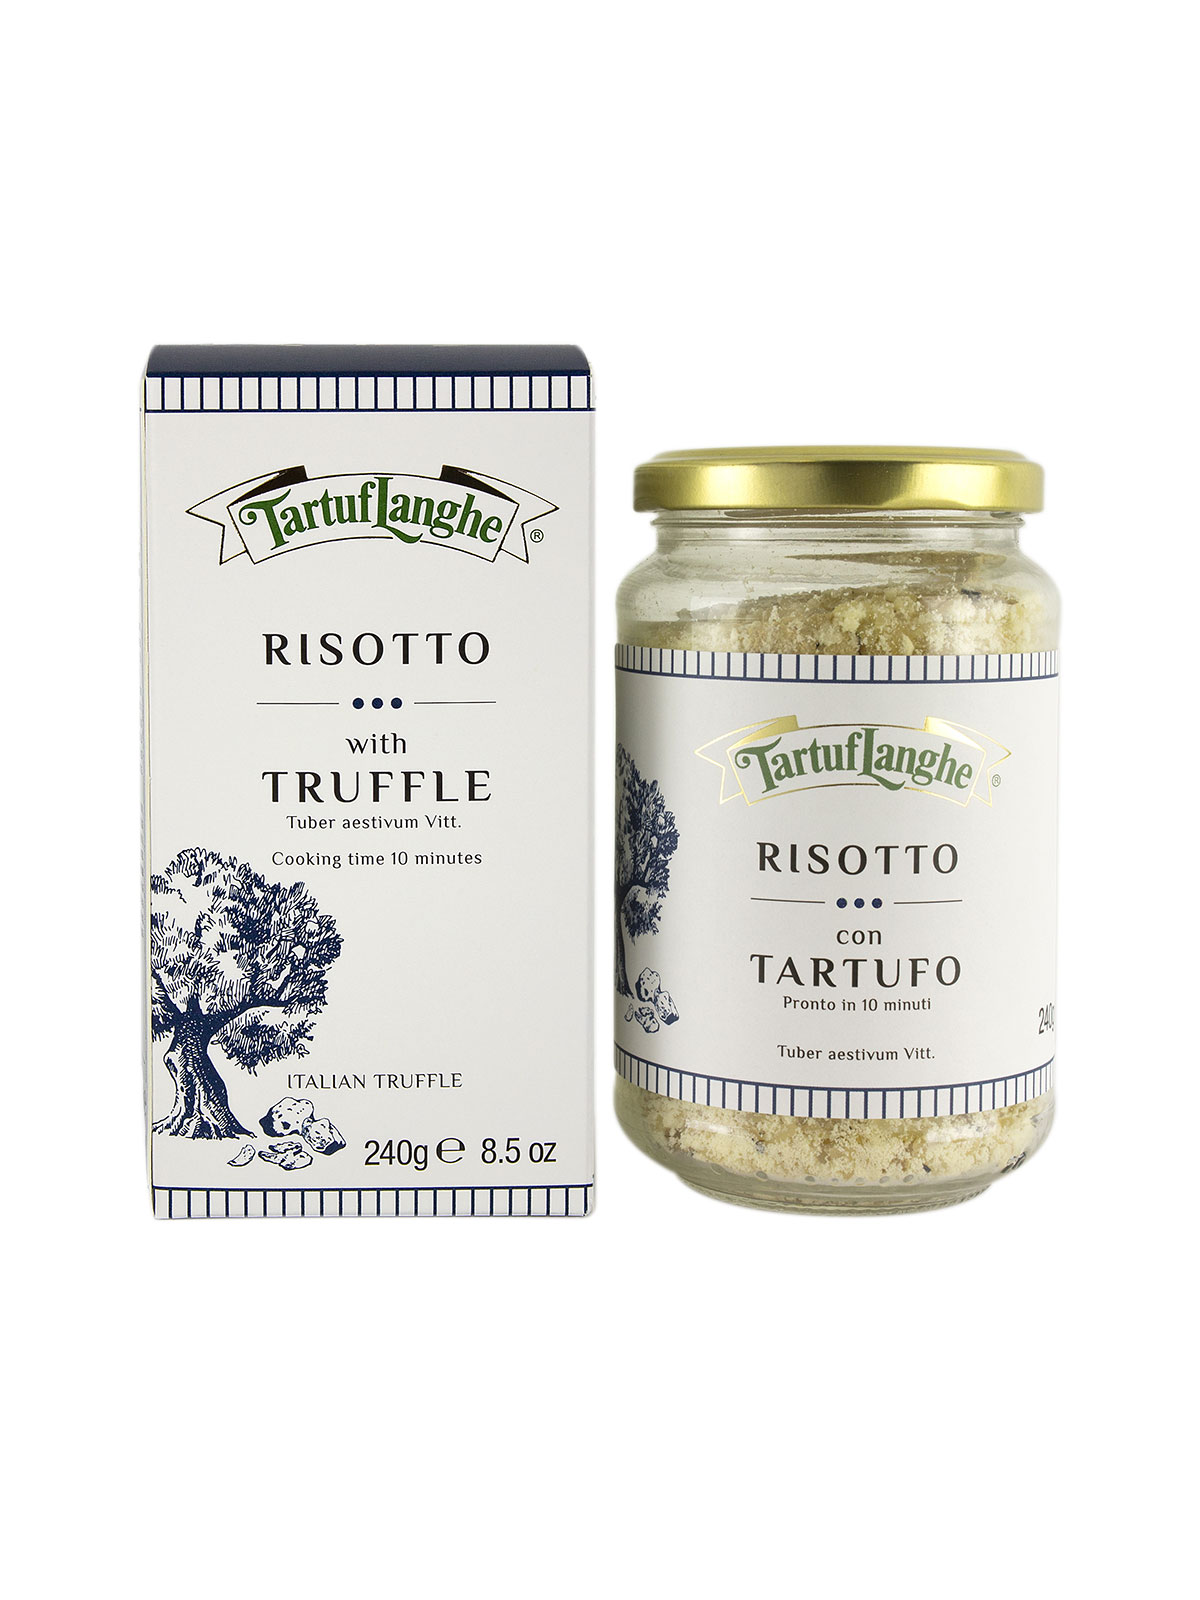 Risotto with Truffle - Pastas, Rice, and Grains - Buon'Italia